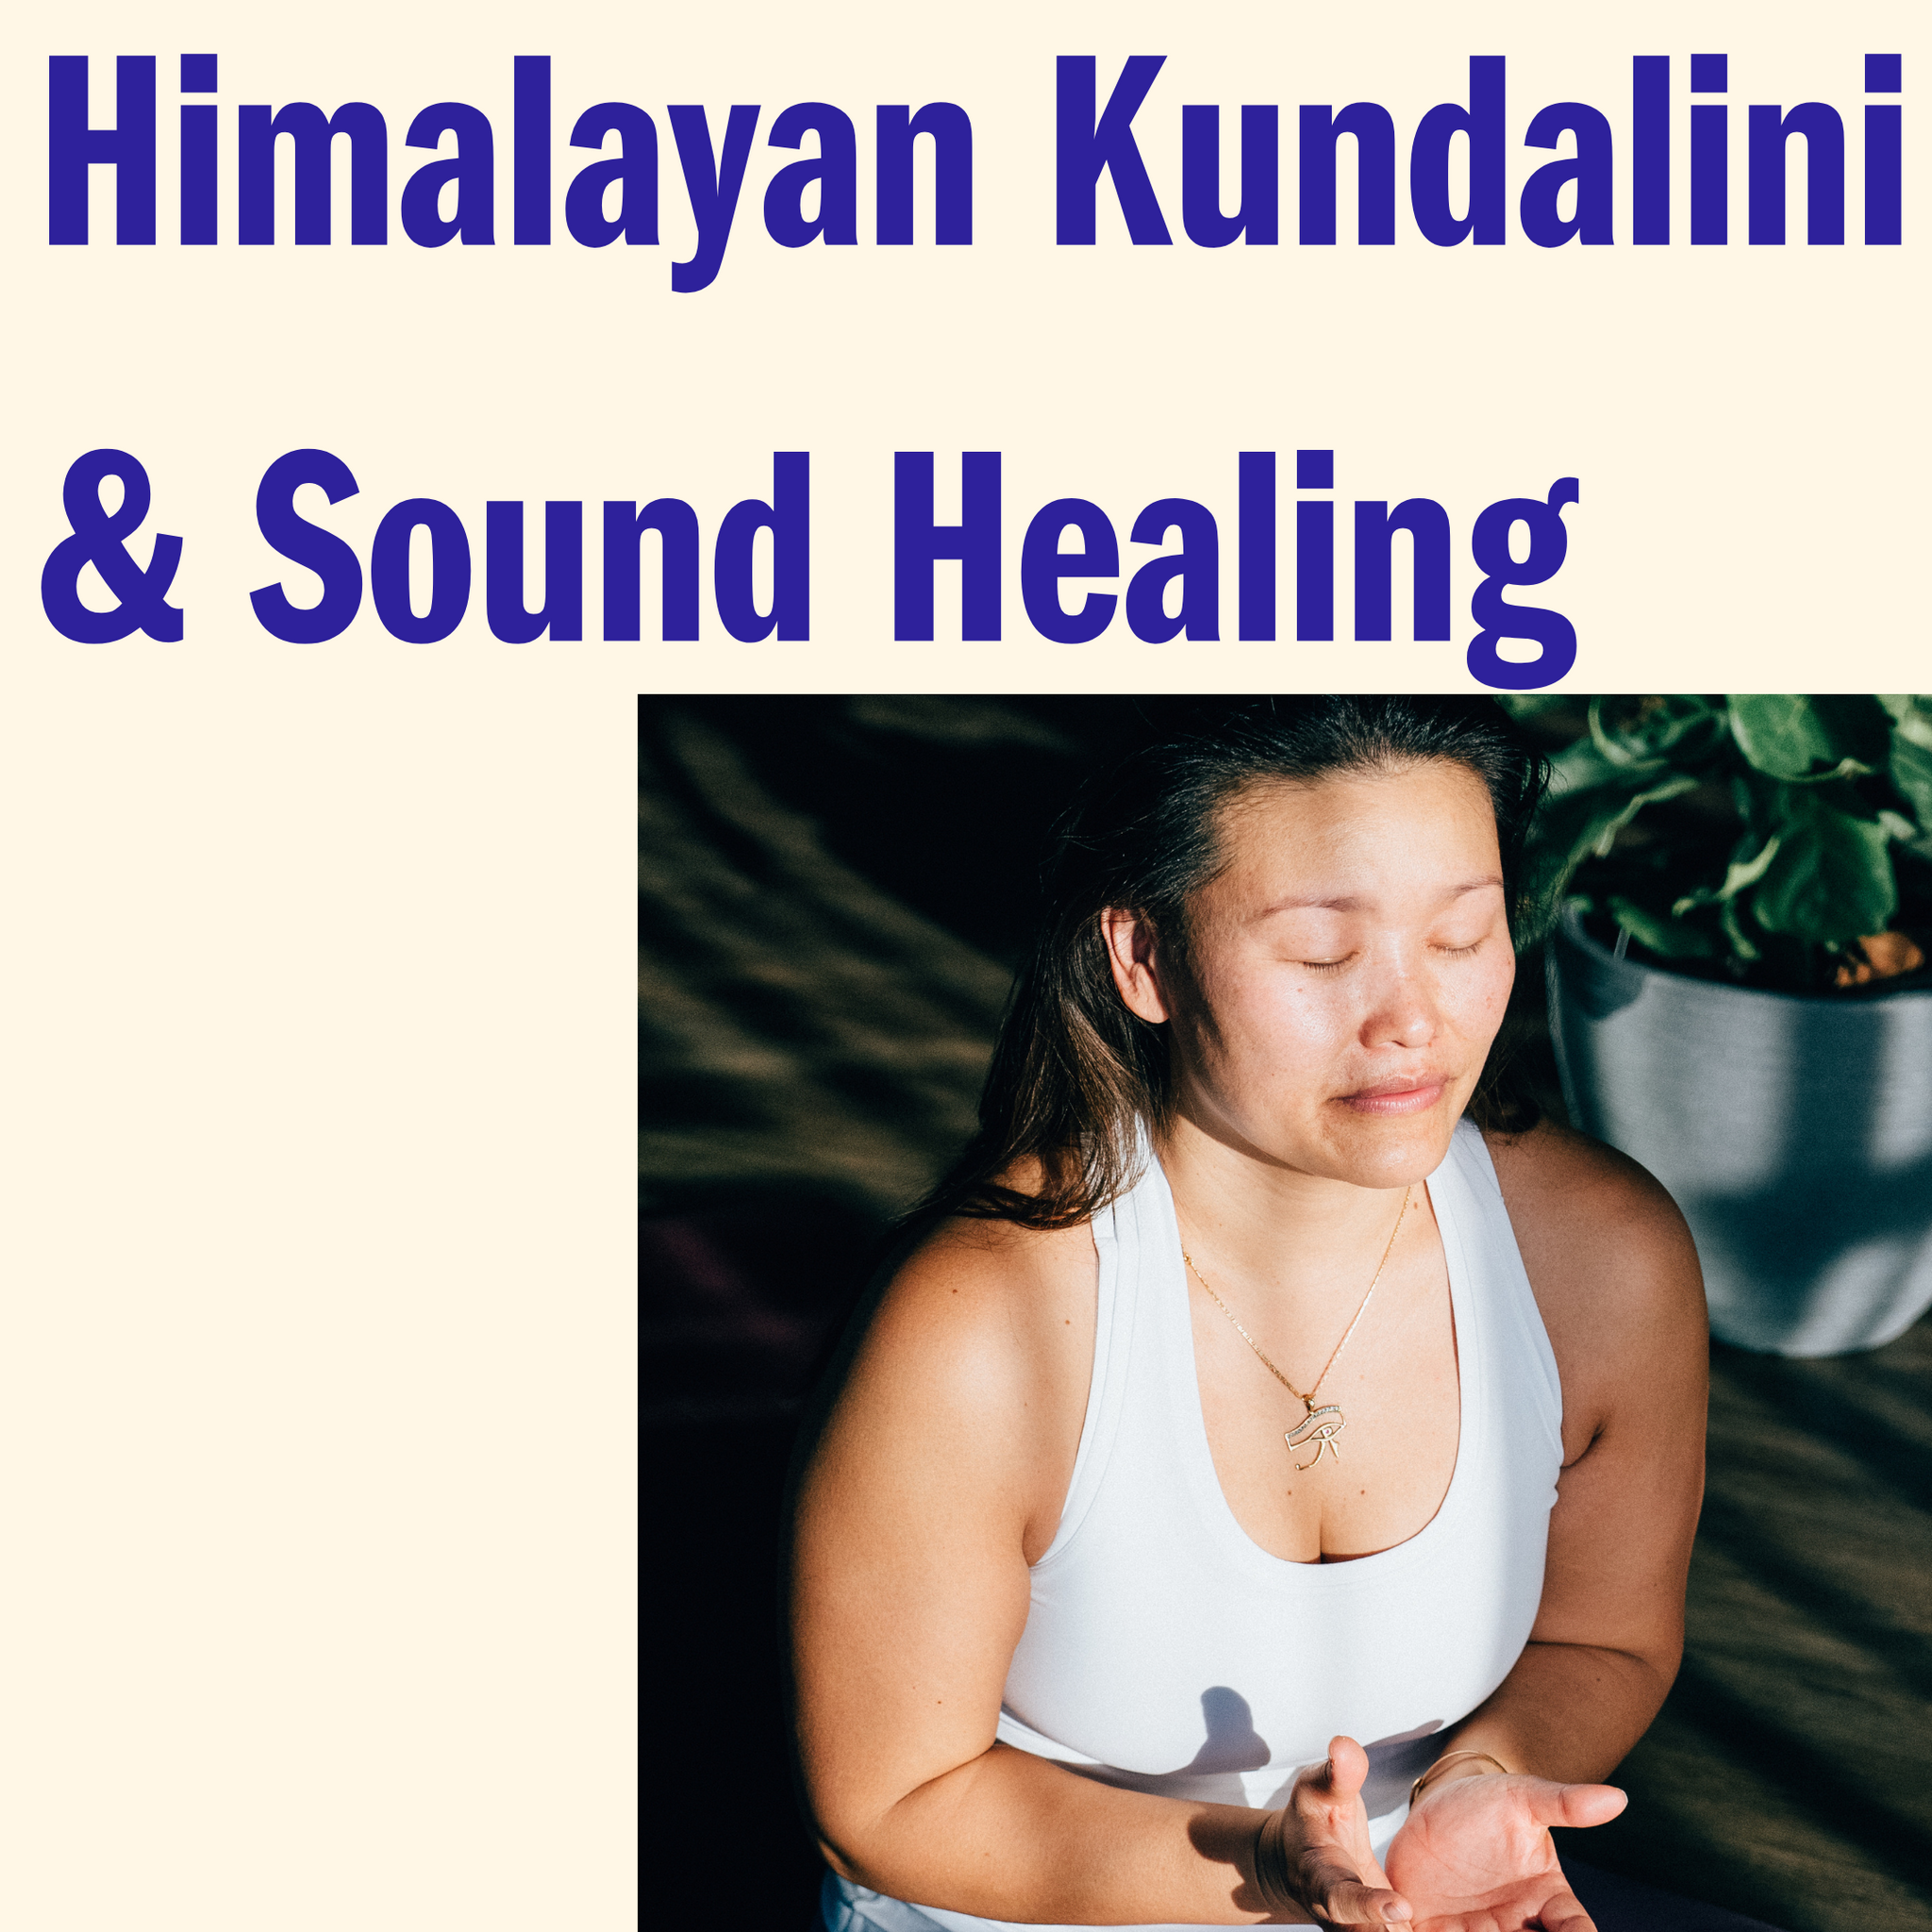 Himalayan Kundalini Yoga & Sound Healing Immersion | Mar 23rd